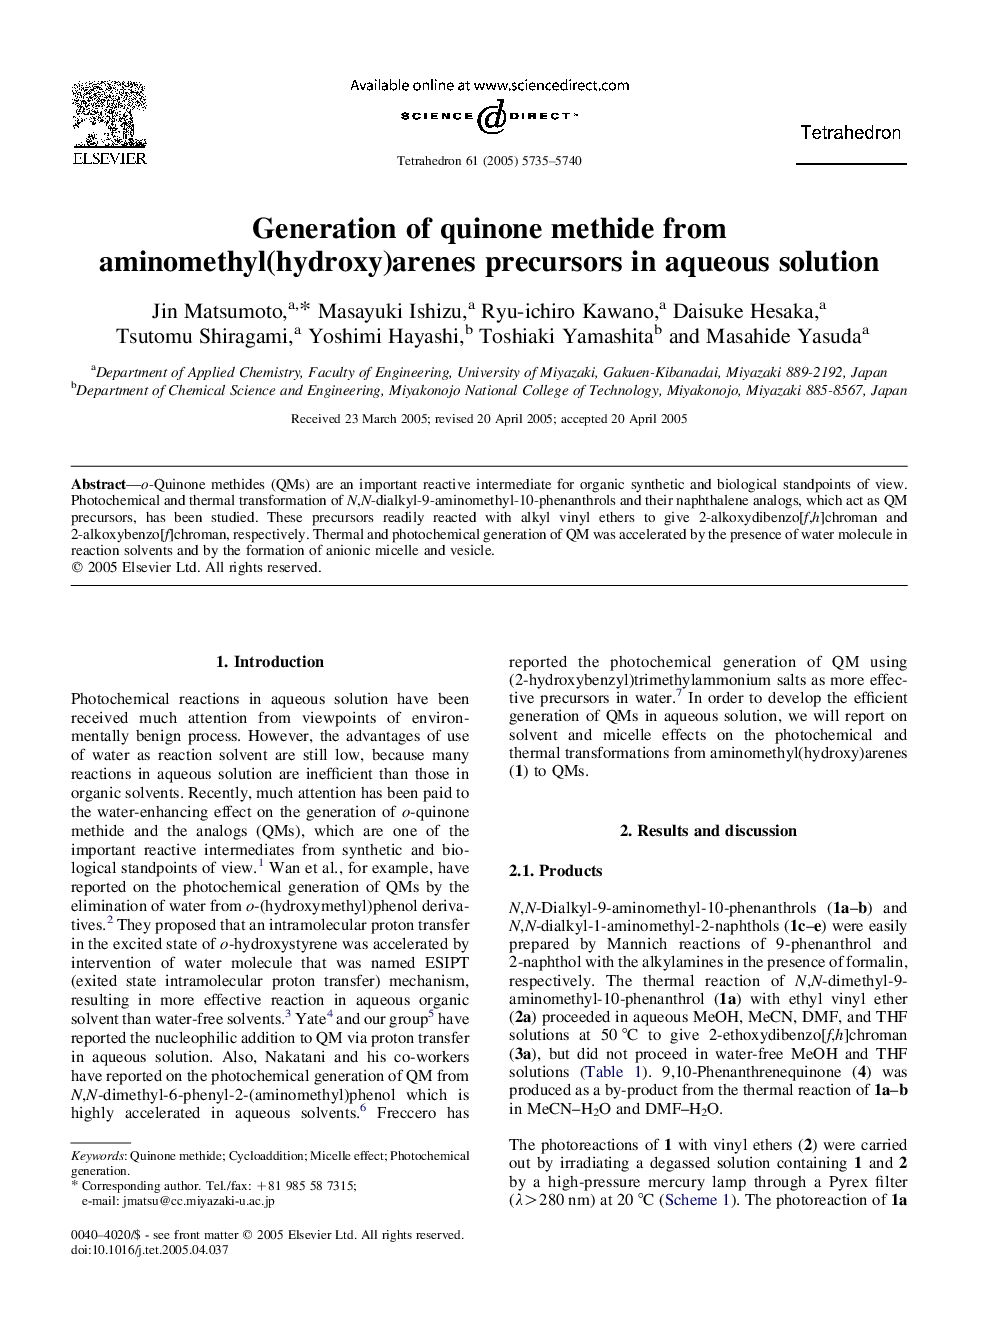 Generation of quinone methide from aminomethyl(hydroxy)arenes precursors in aqueous solution